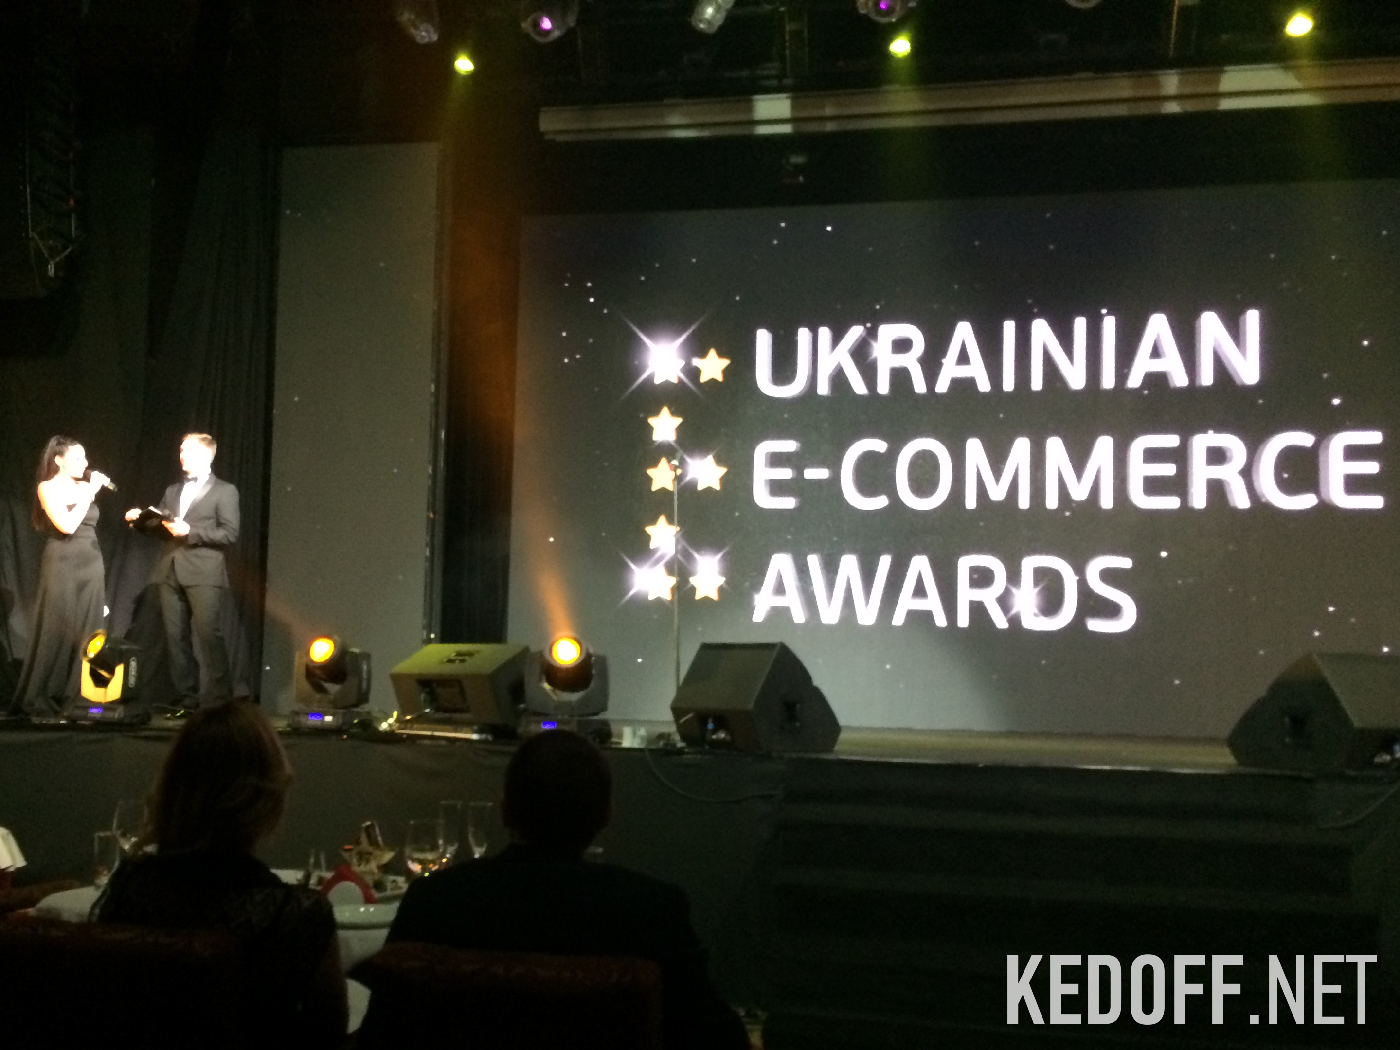 интернет магазин обуви Kedoff.net Ukrainian E-commerce Awards 2016